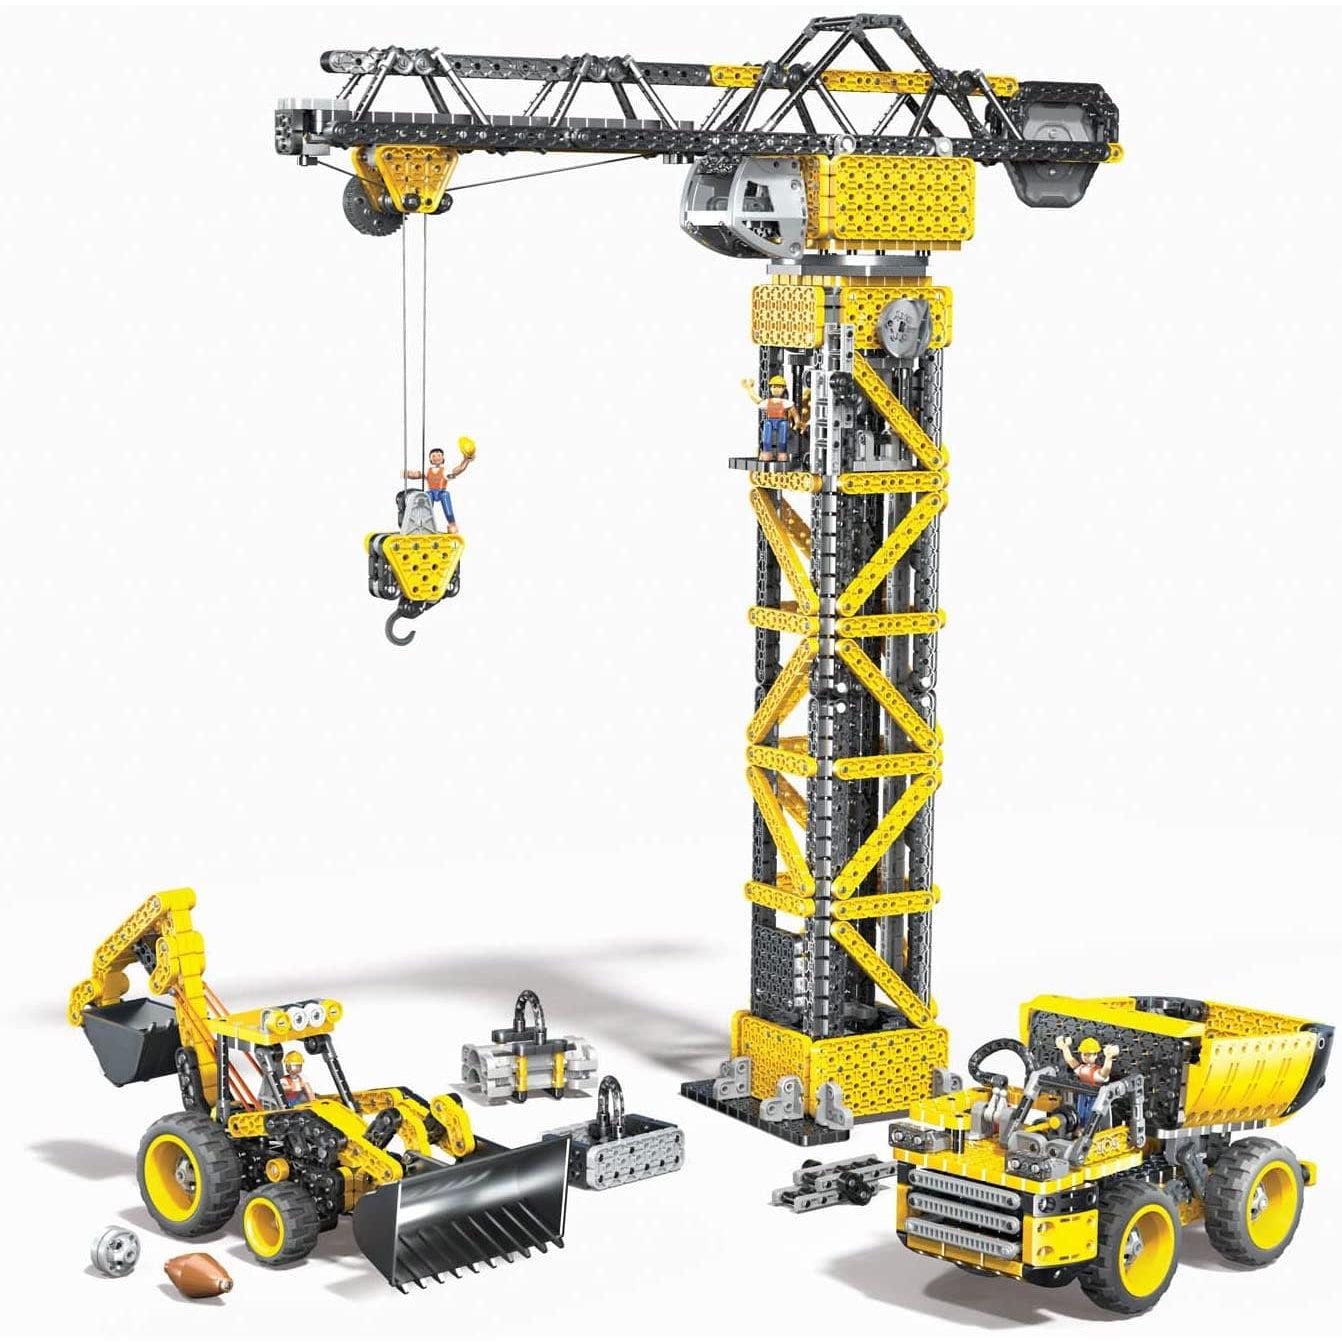 Spin Master-Vex Robotics STEM Construction Zone-406-7097-Legacy Toys